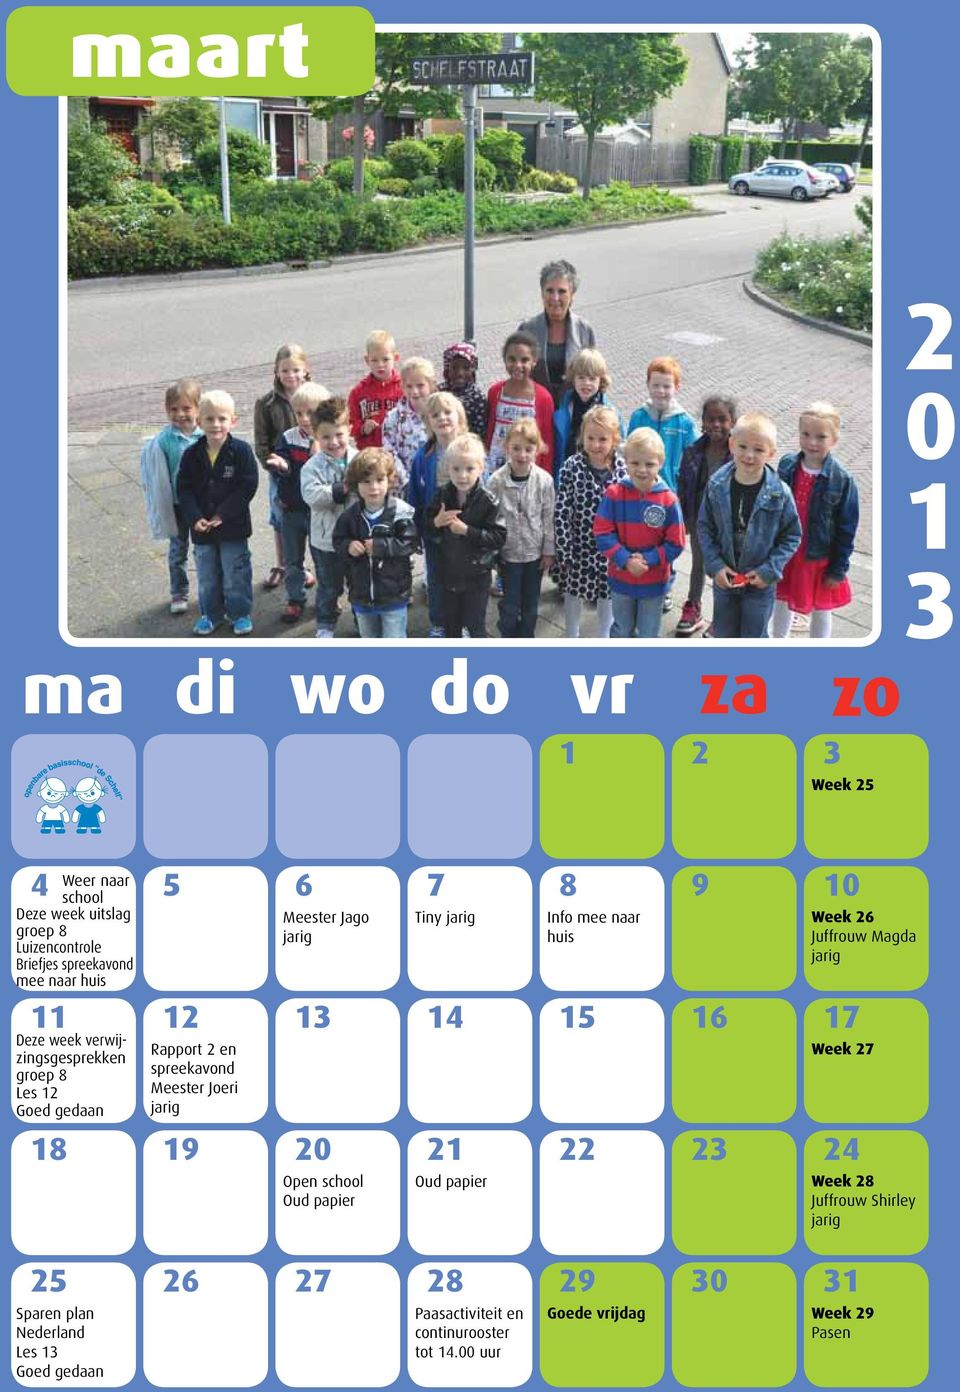 spreekavond Meester Joeri 8 9 4 Open school 5 6 7 8 9 Sparen plan Nederland Les Tiny Paasactiviteit